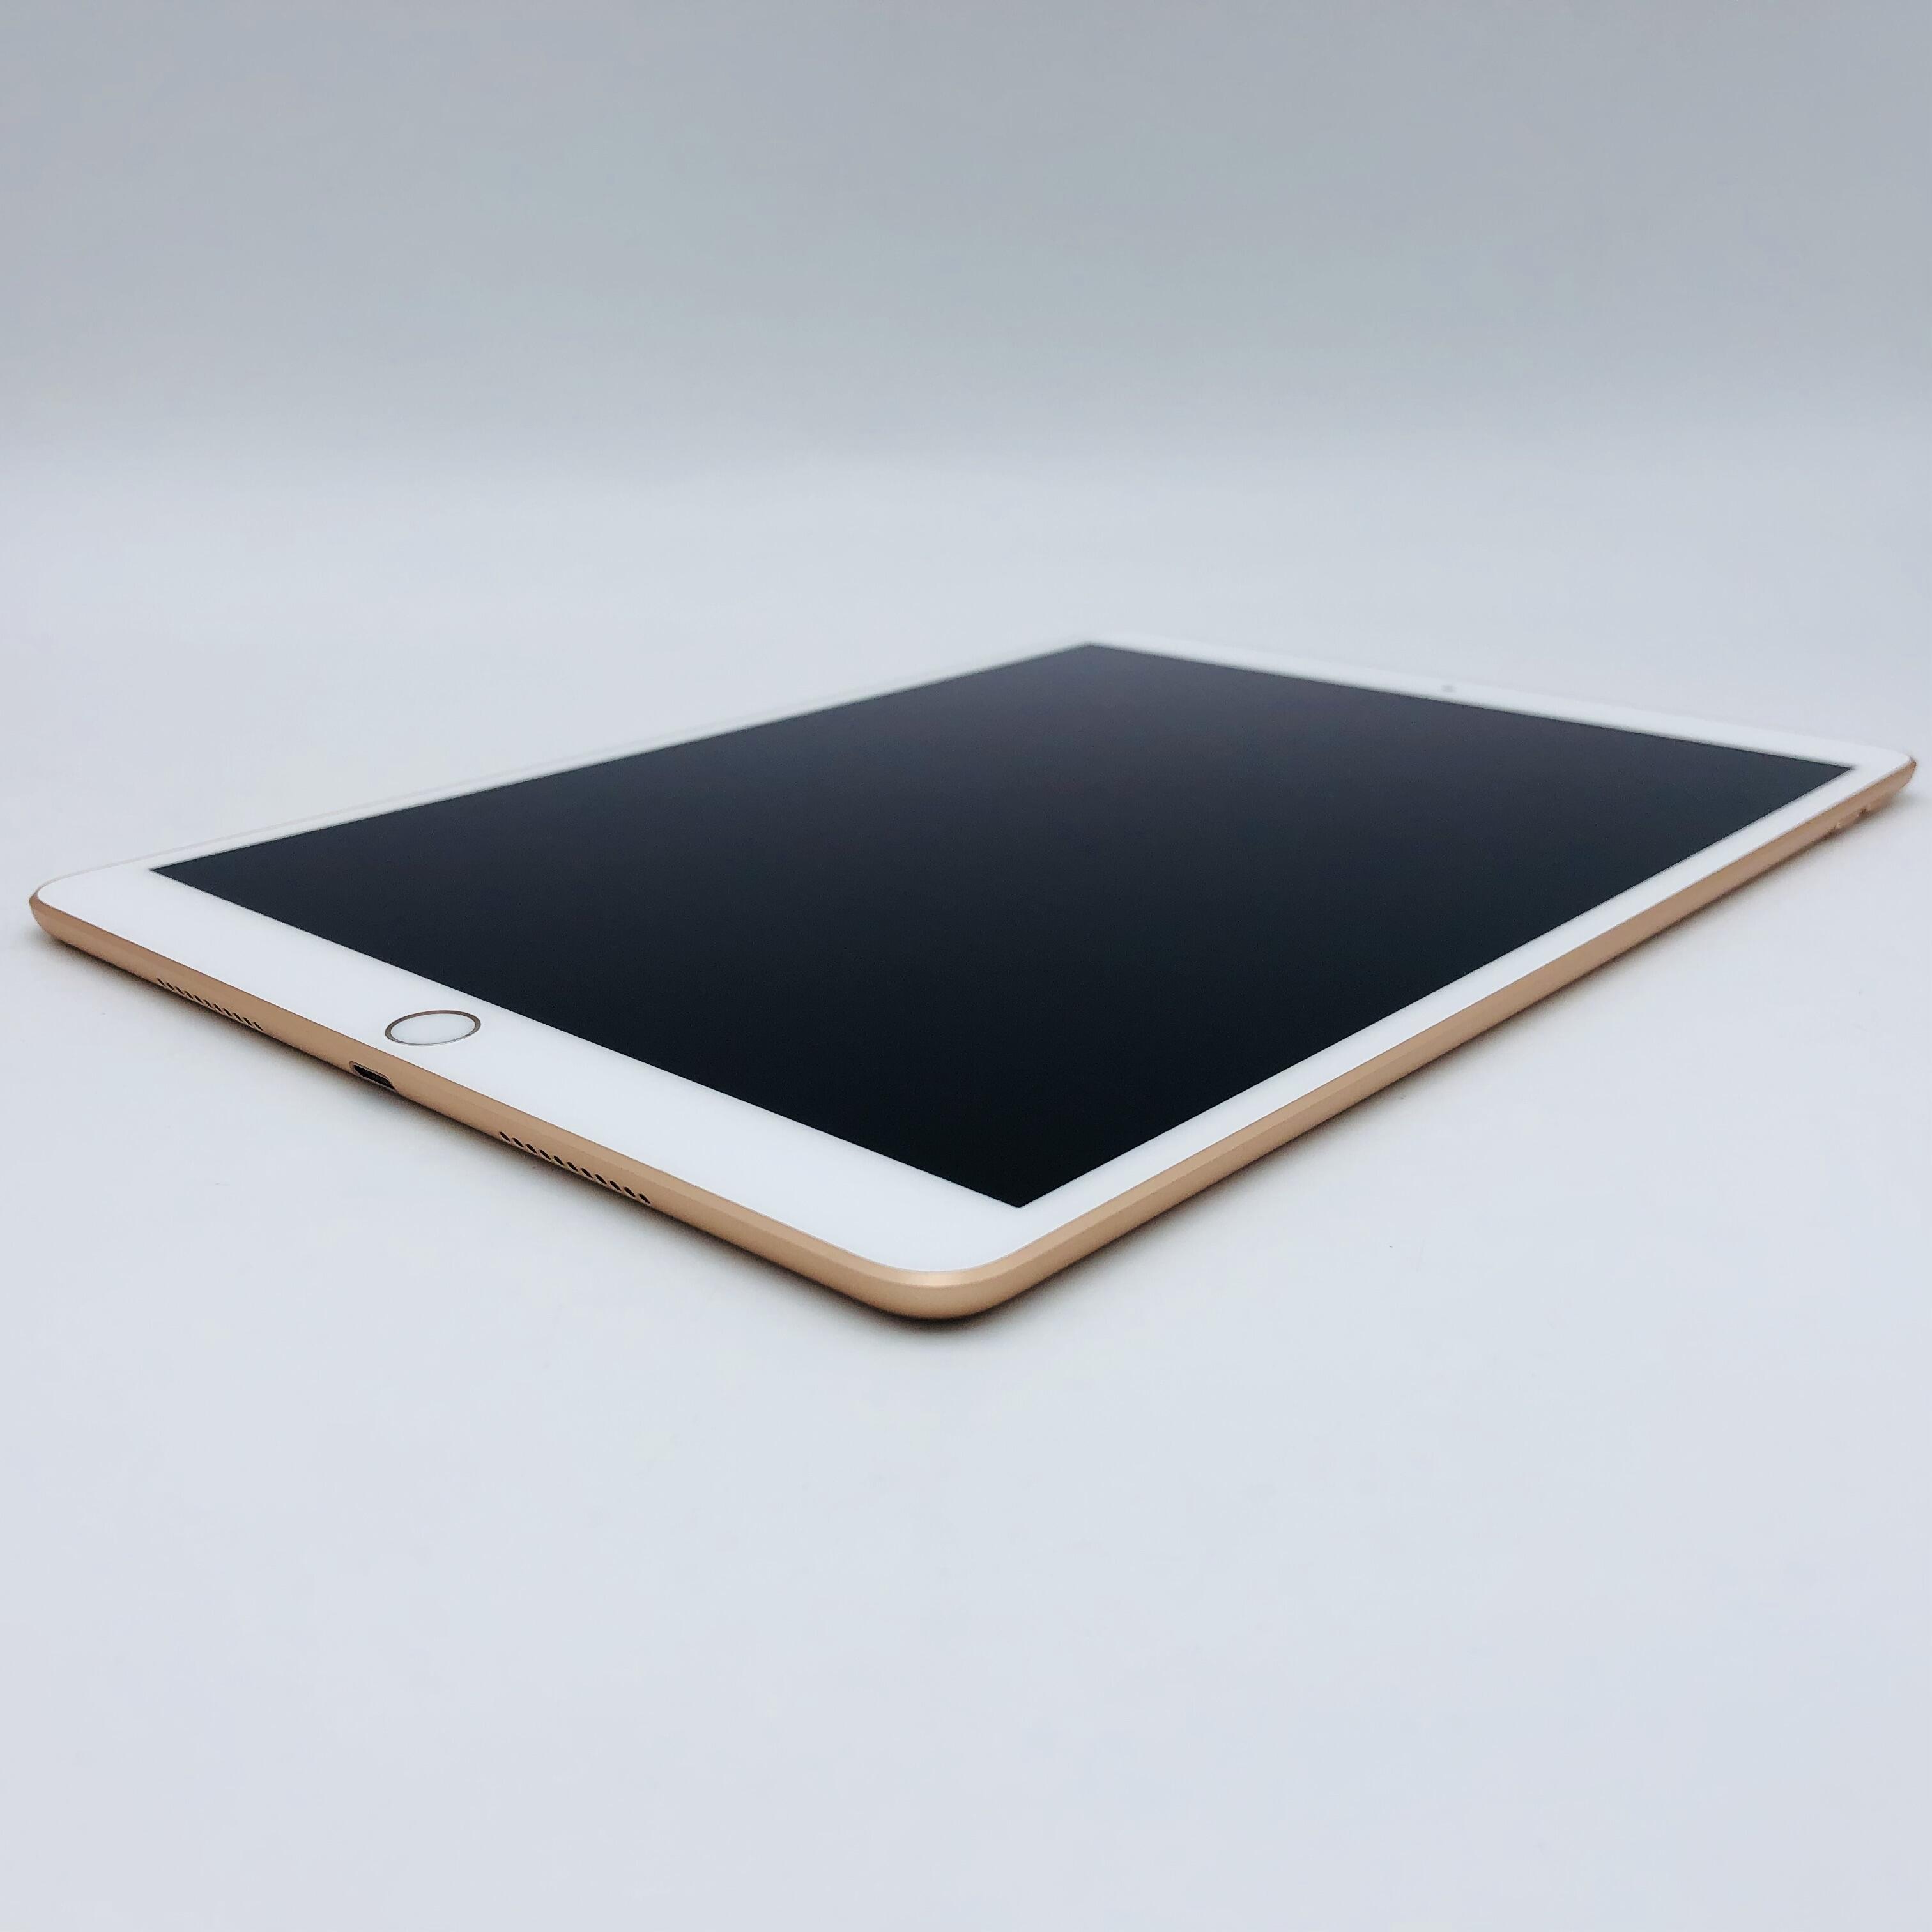 iPad Air 3 64G 国行官换新机